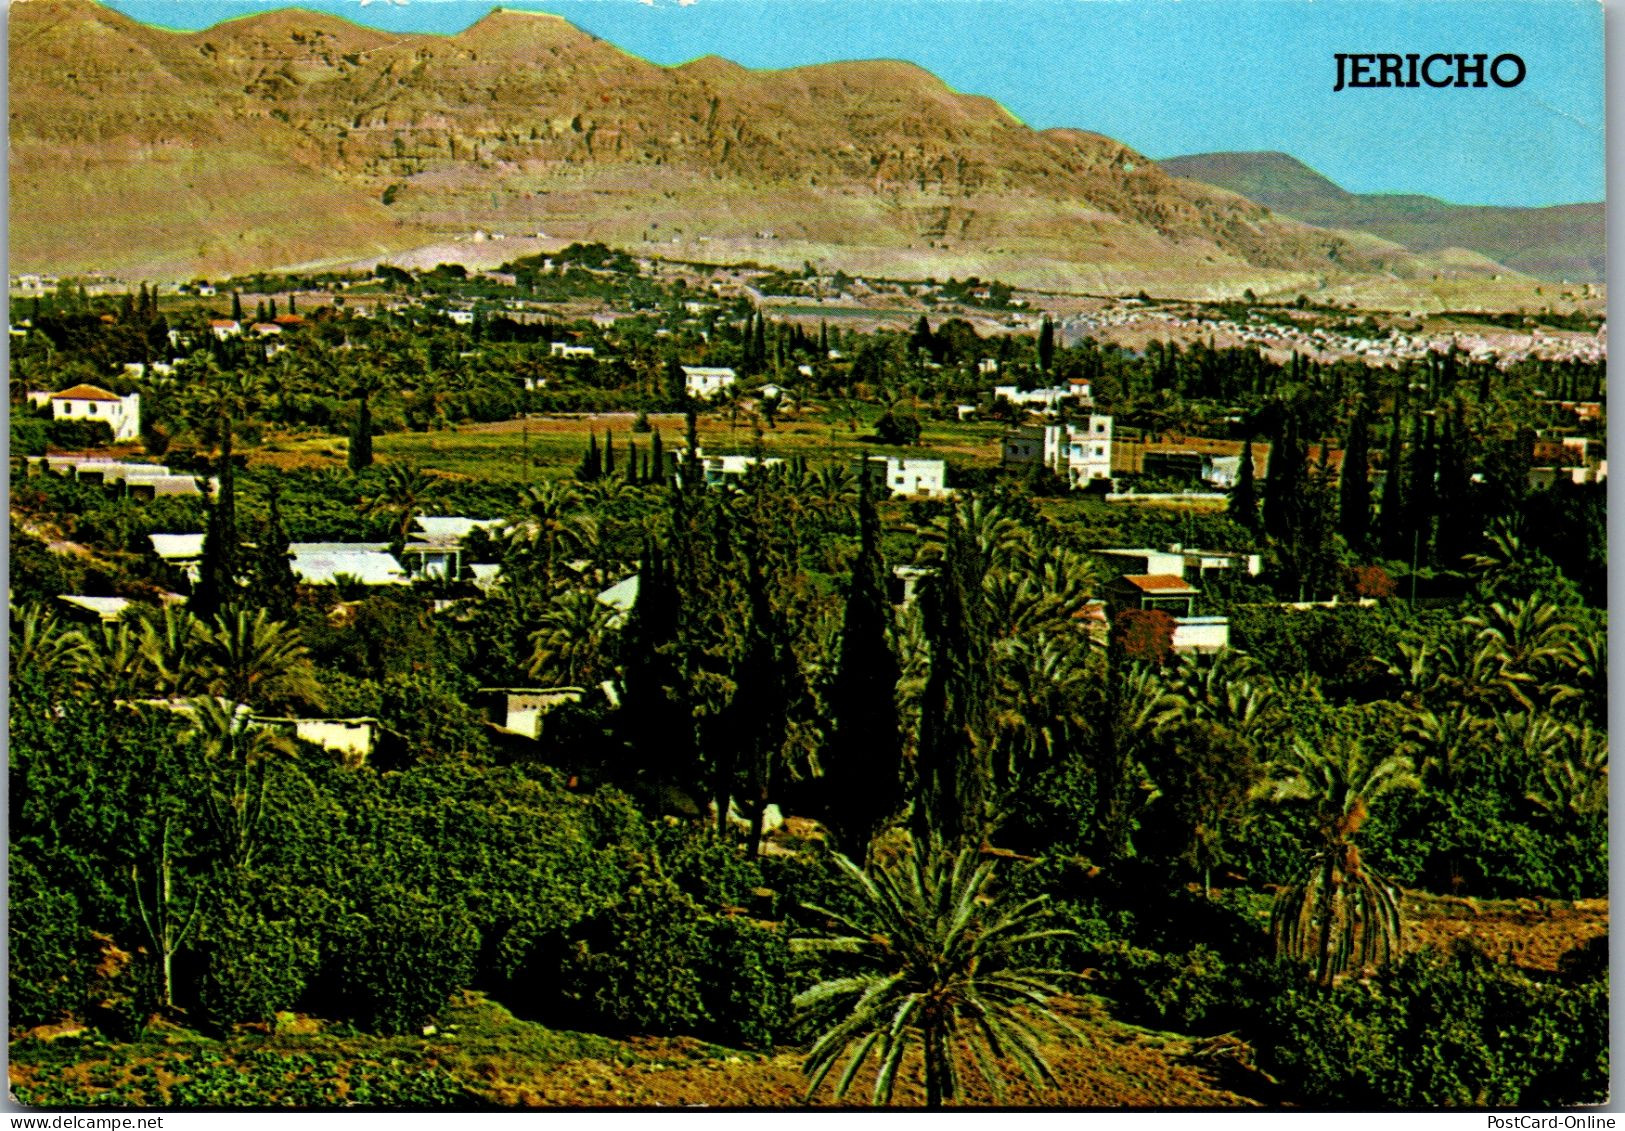 50730 - Westjordanland - Jericho , View - Gelaufen 1983 - Israel